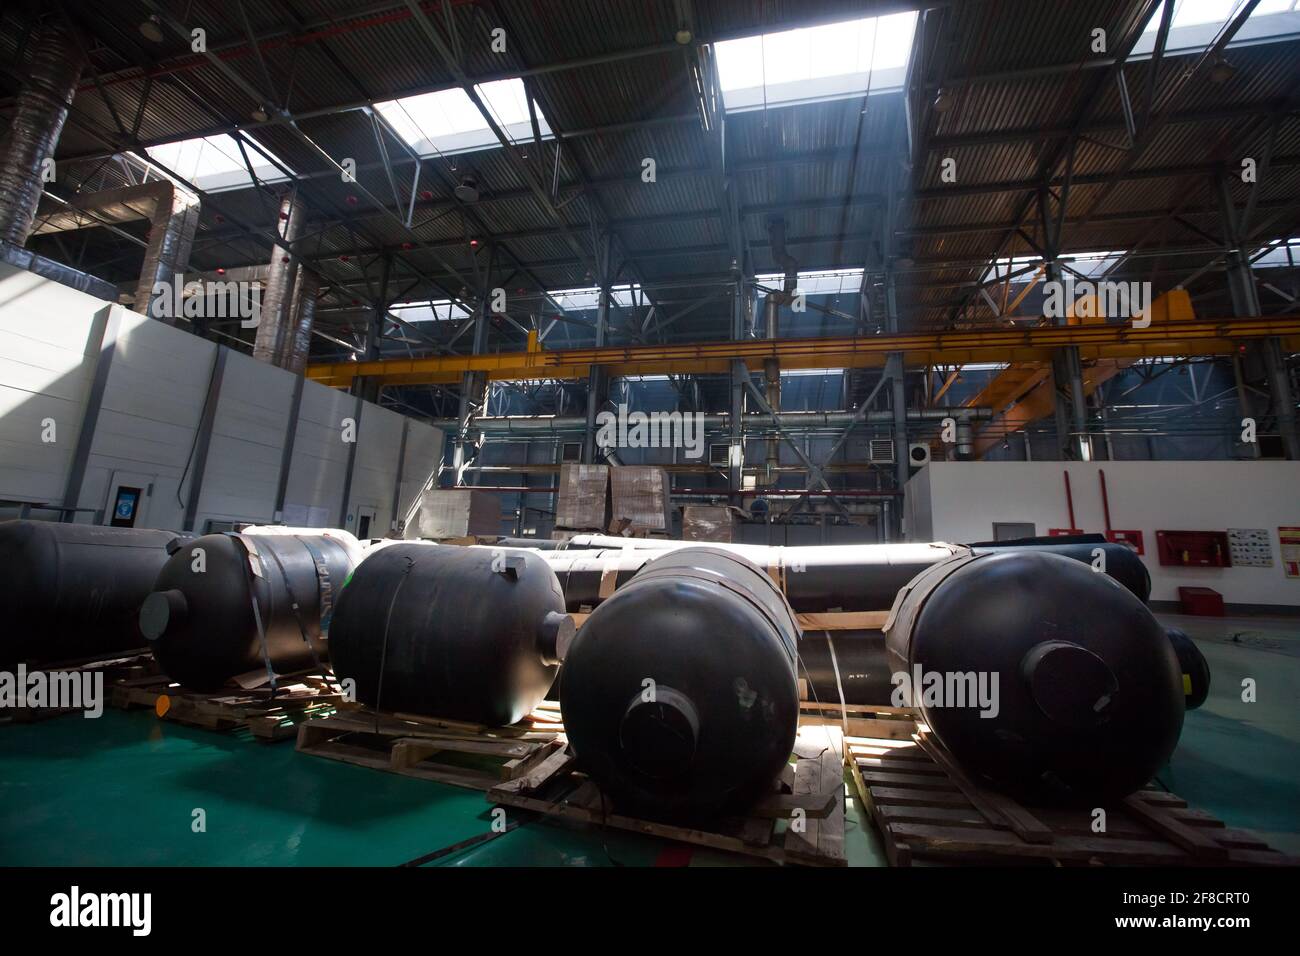 Kazakhstan, Nur-sultan locomotive-building plant. Metal air tank on the floor. Stock Photo